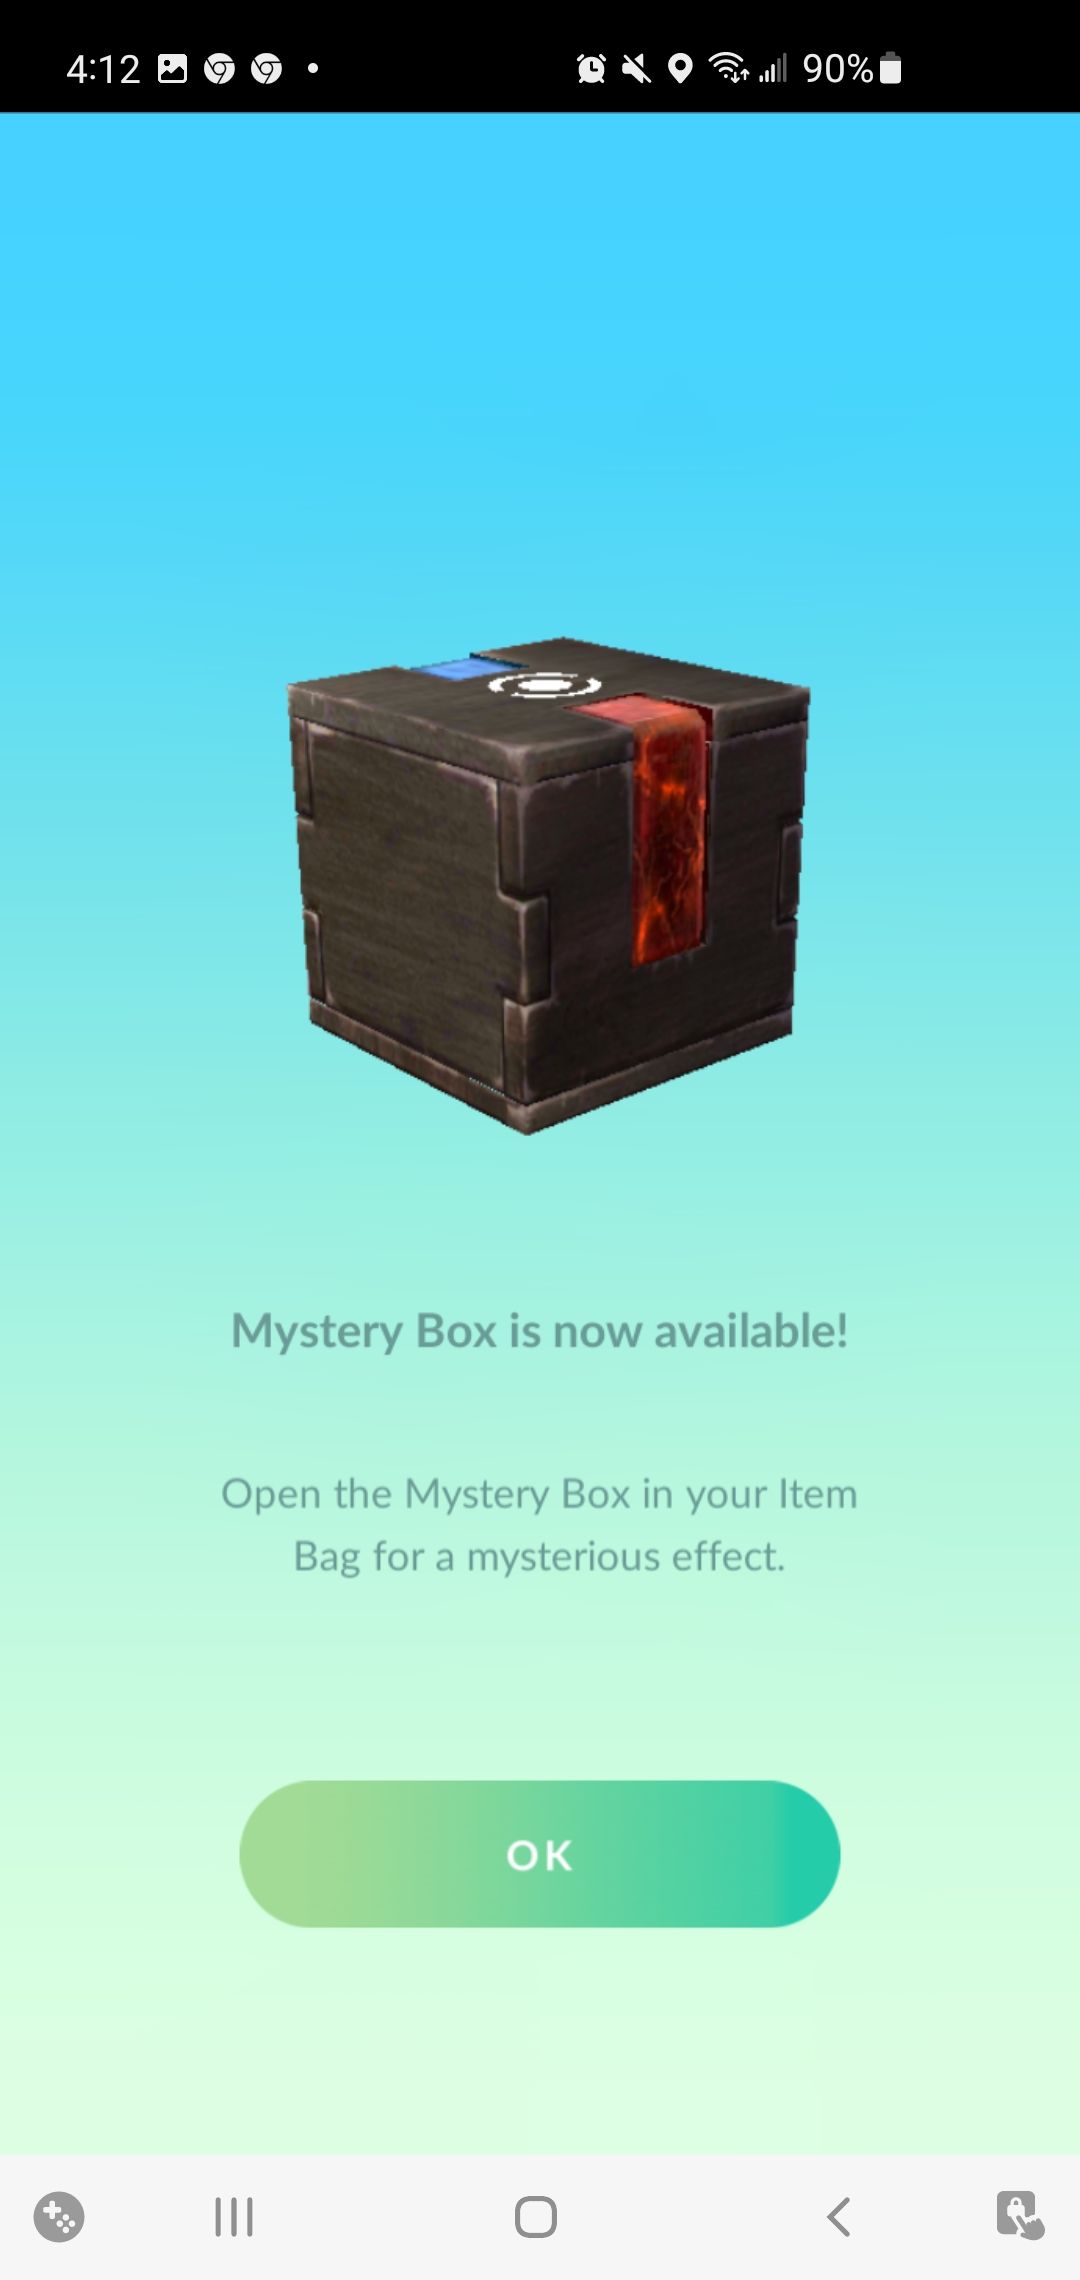 Screenshot of obtaining a Mystery Box for Pokemon Go